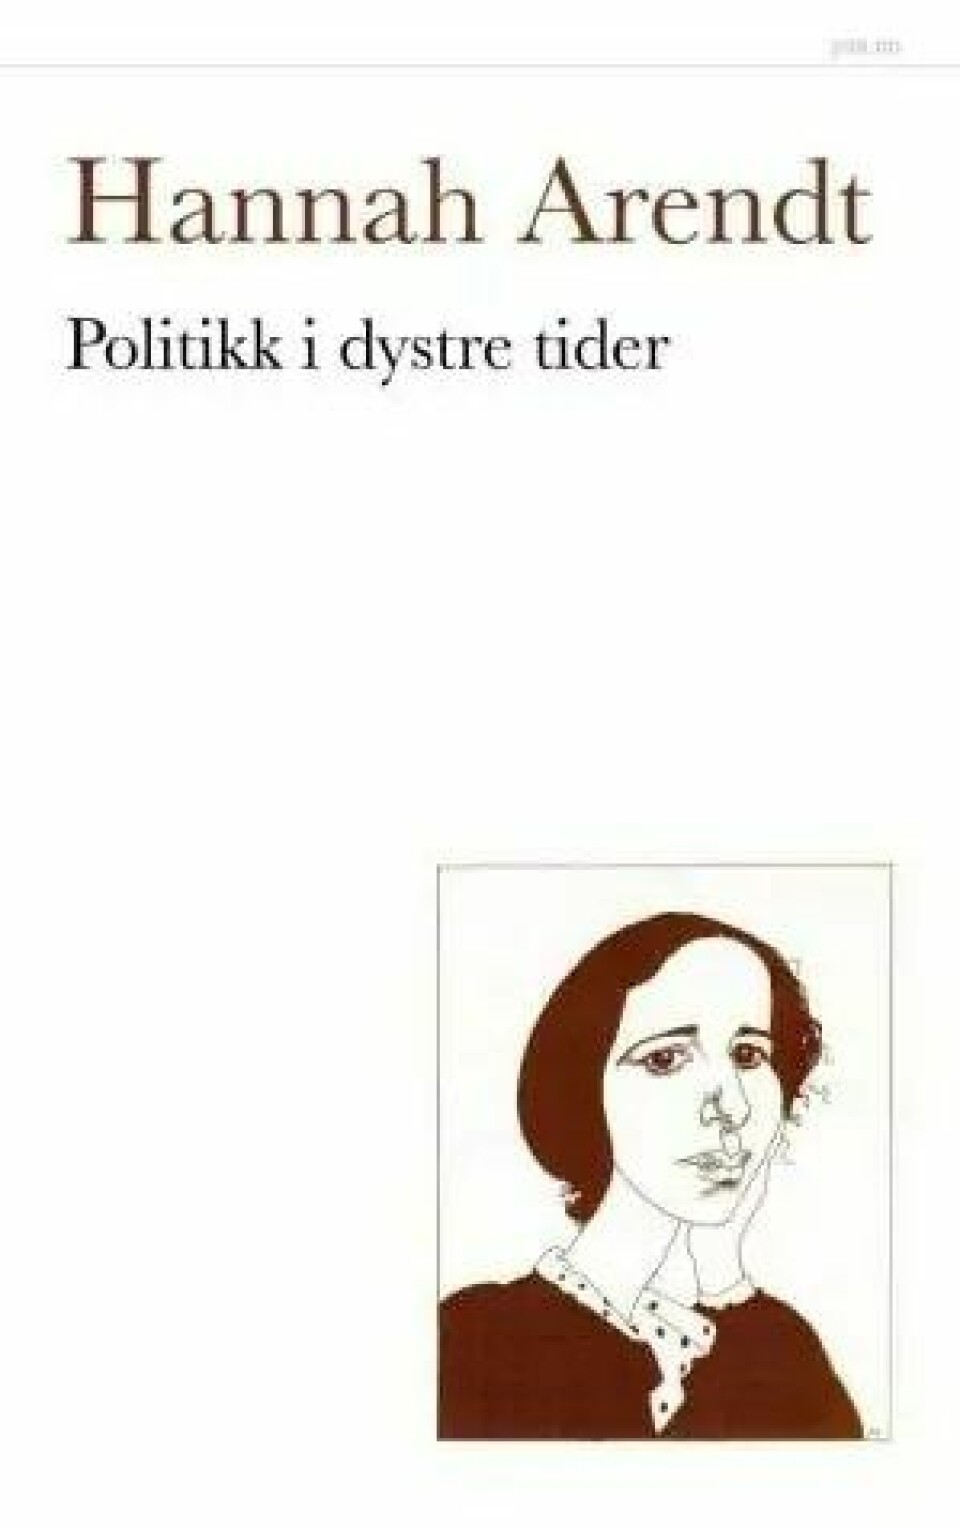 Hannah Arendt: Politikk i dystre tider av Rune Slagstad, Pax, 2019